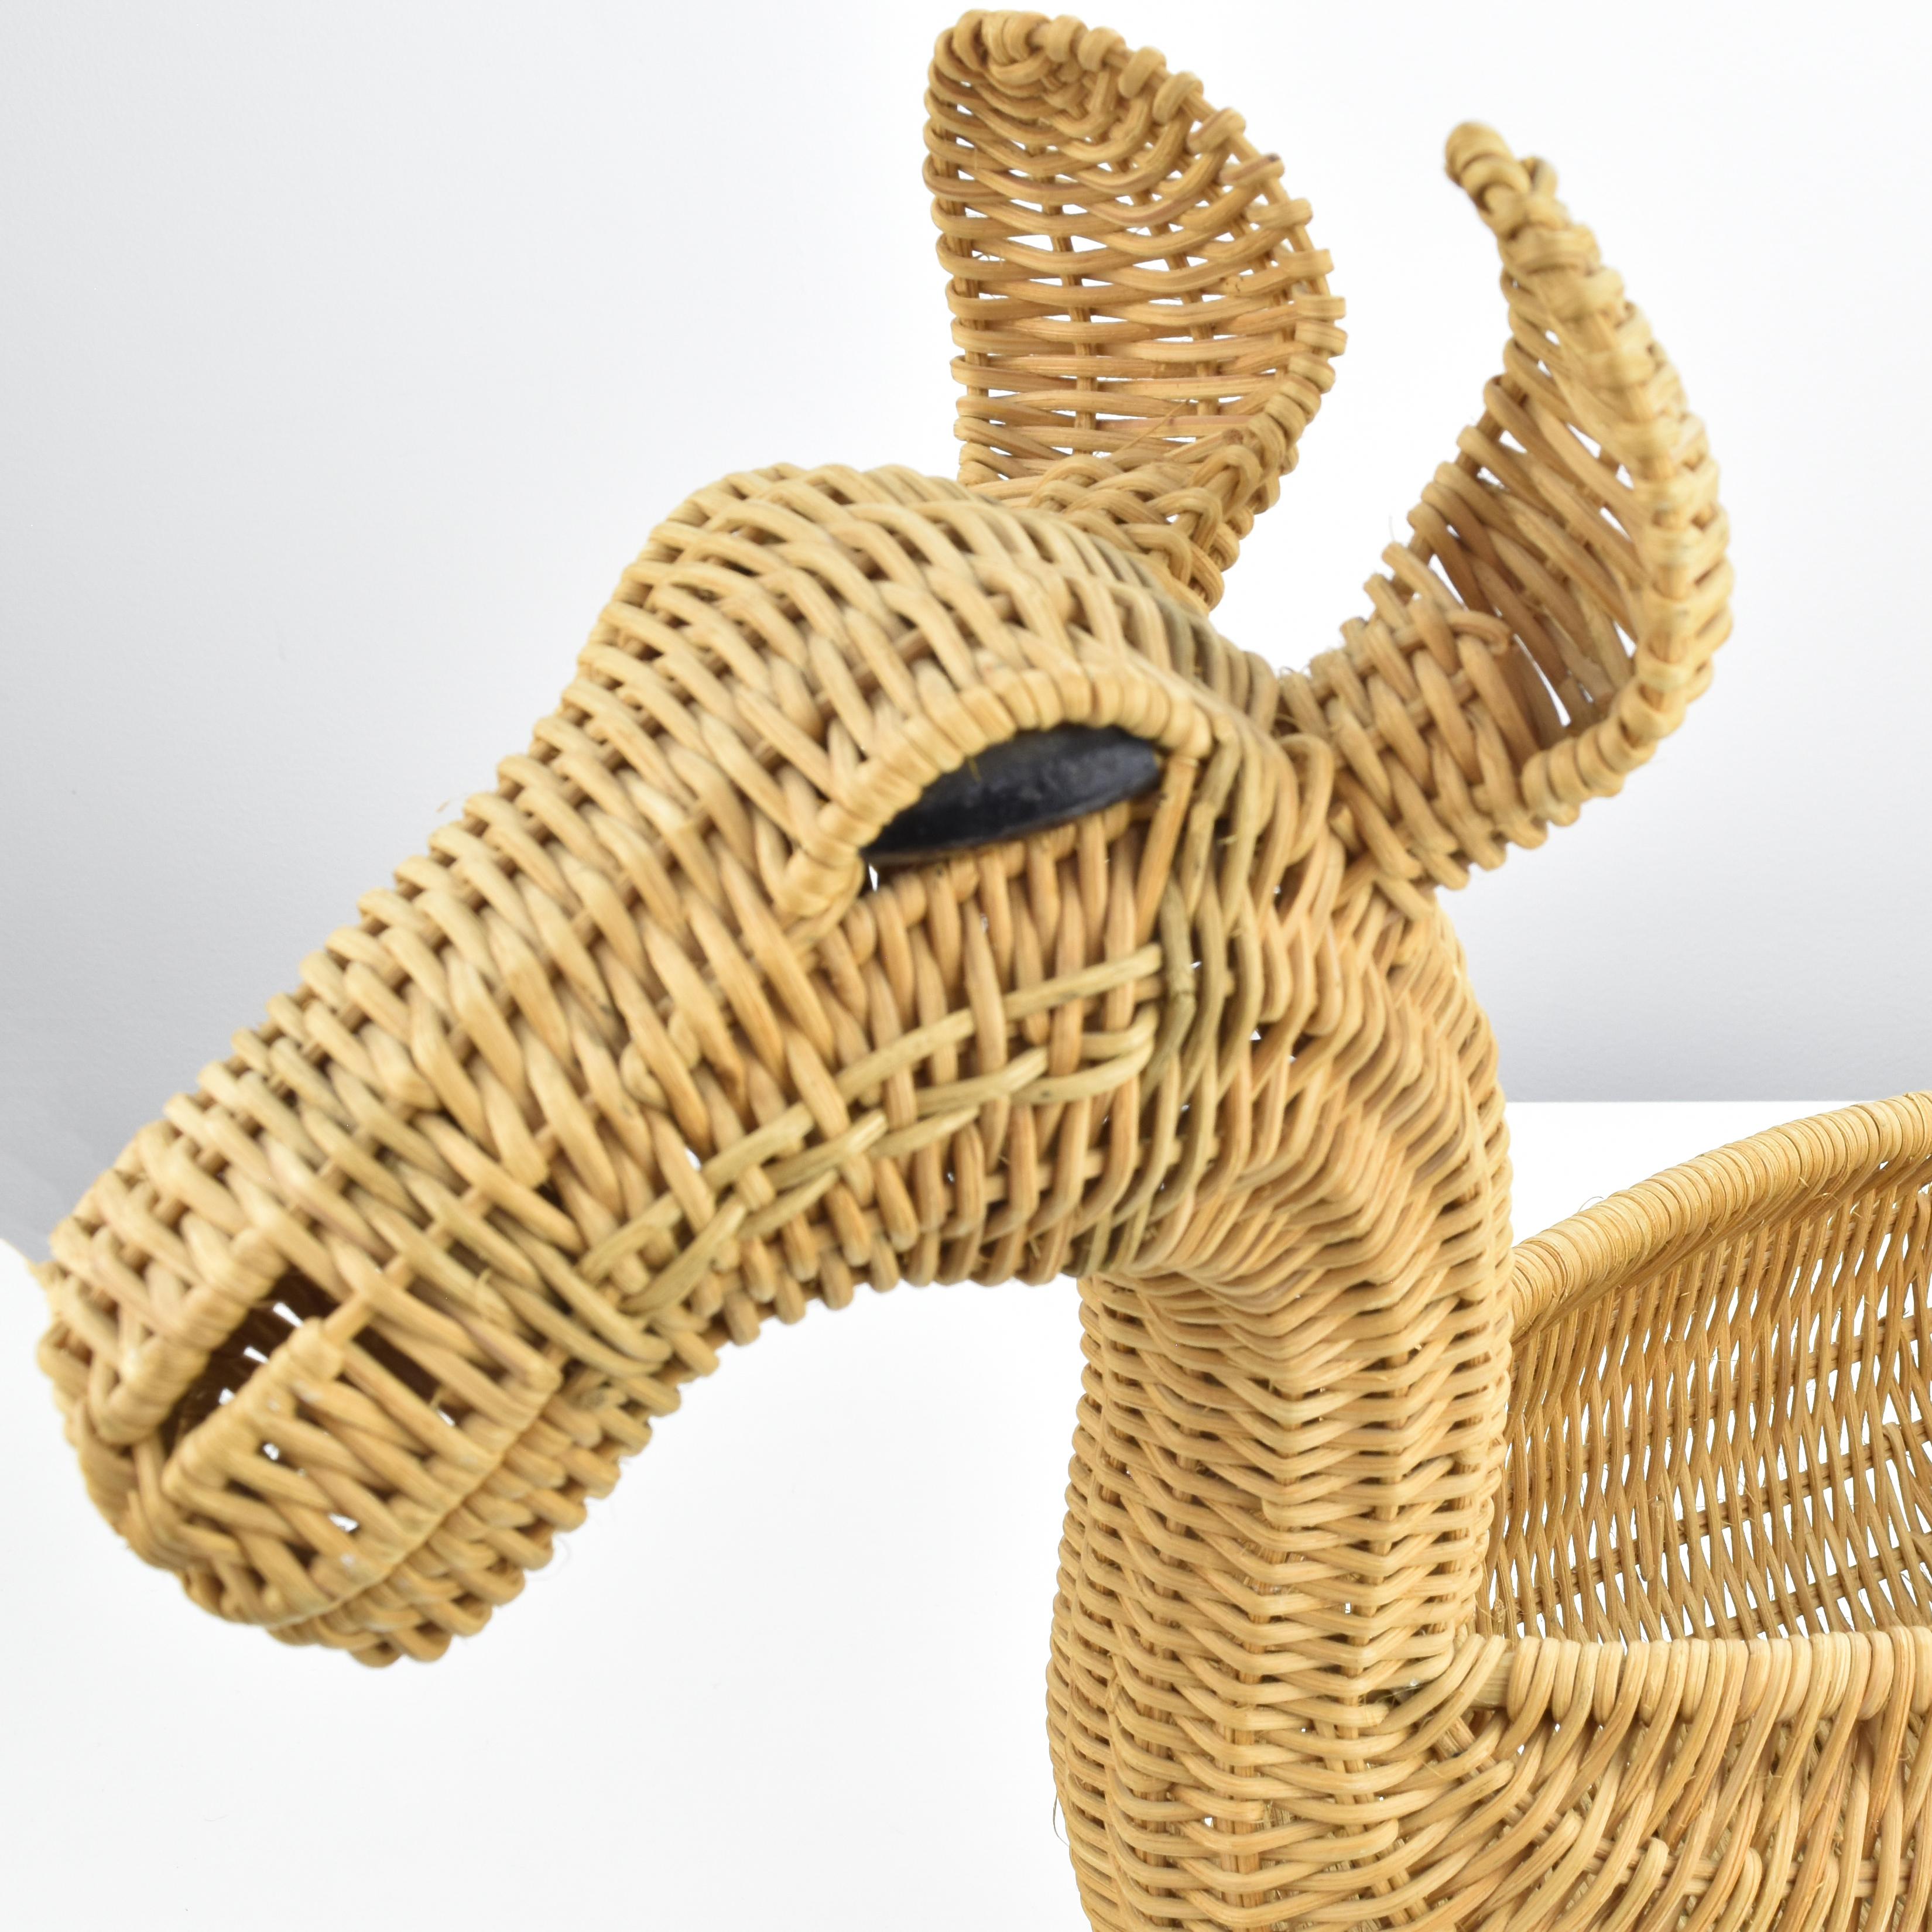 Sculptural French Wicker Rattan Cane Alpaca Fruit Basket Bowl MCM Boho Tiki For Sale 2